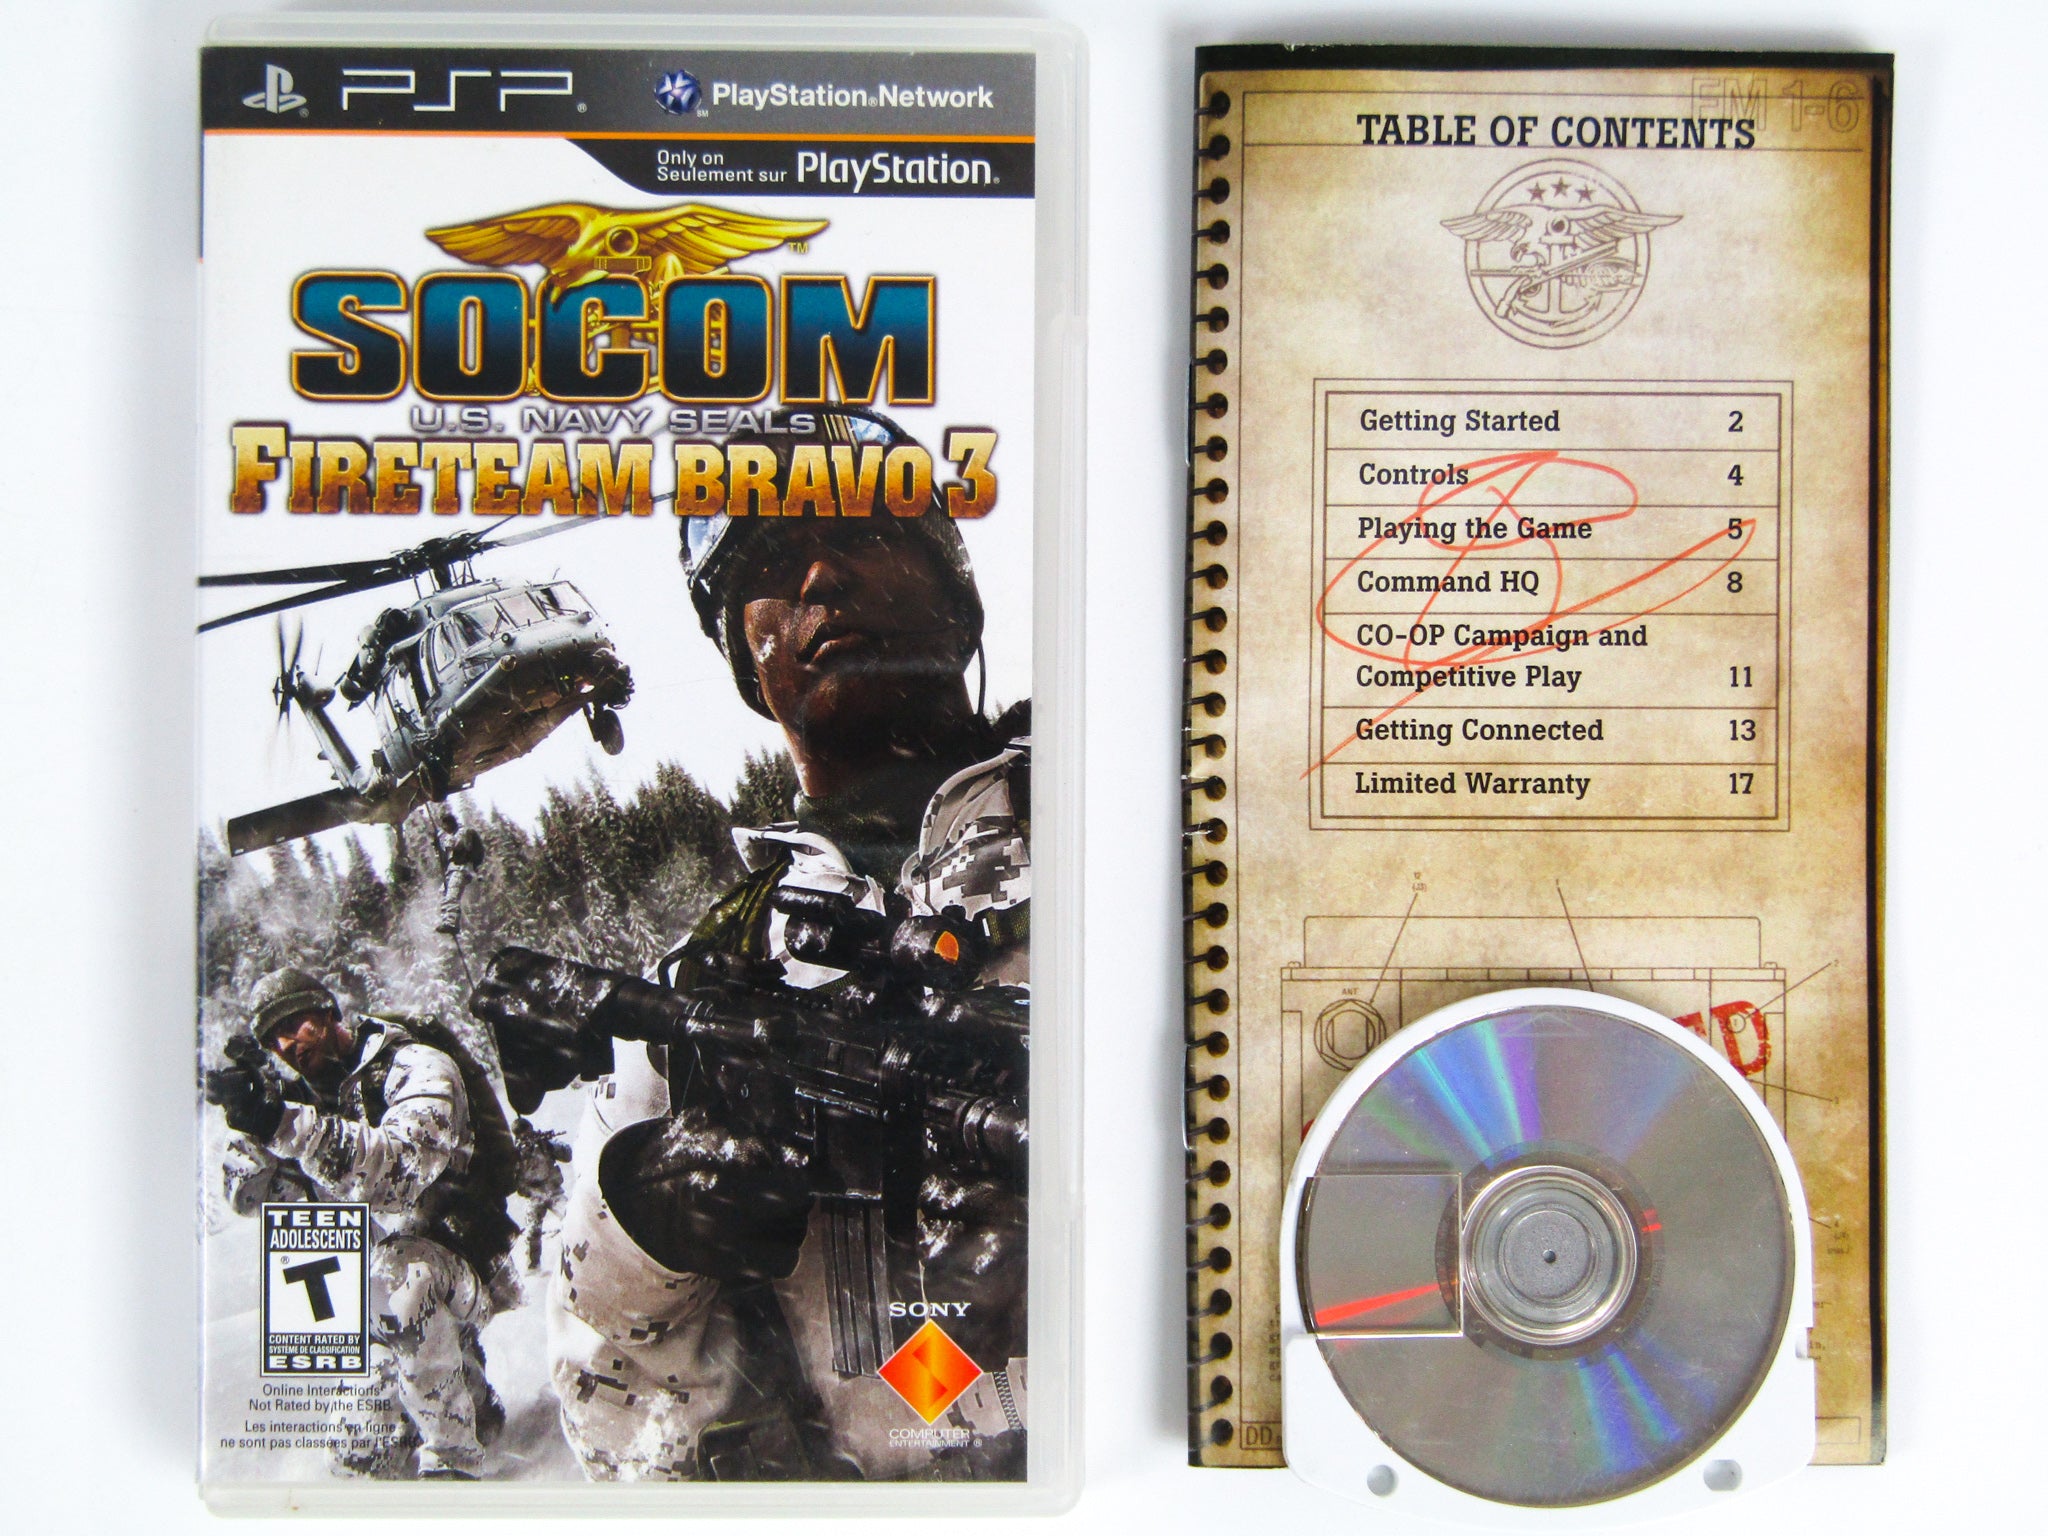 SOCOM US Navy Seals Fireteam Bravo 3, PSP